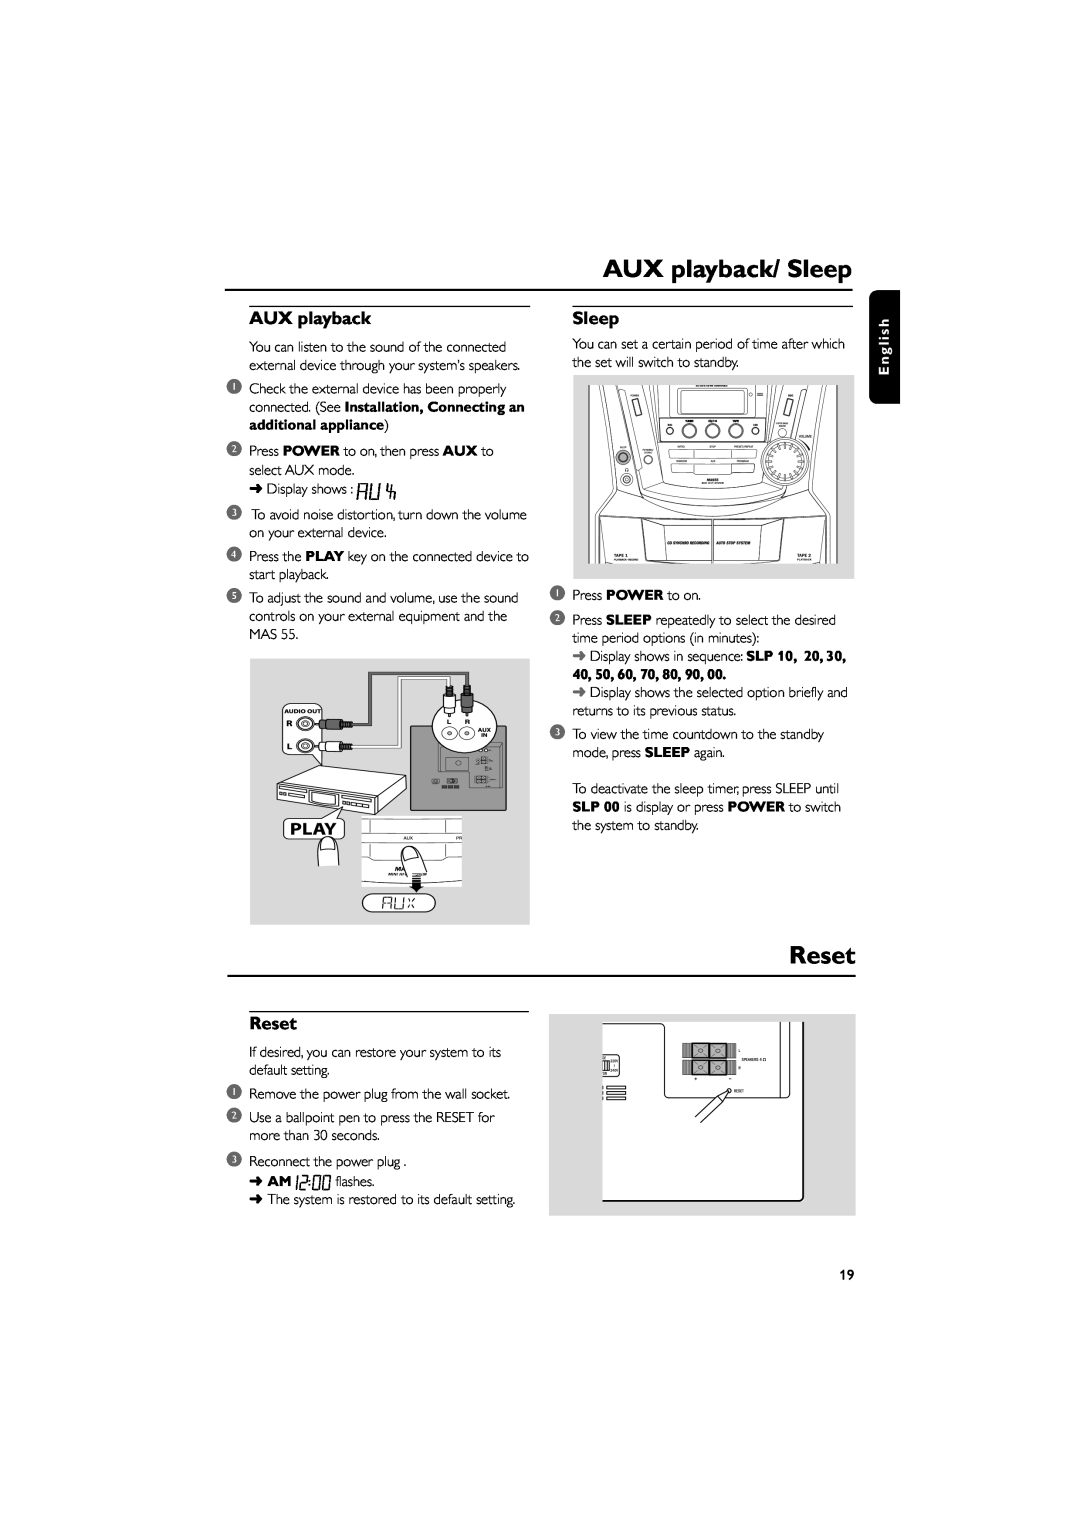 Philips MAS55 manual AUX playback/ Sleep, Reset, English 